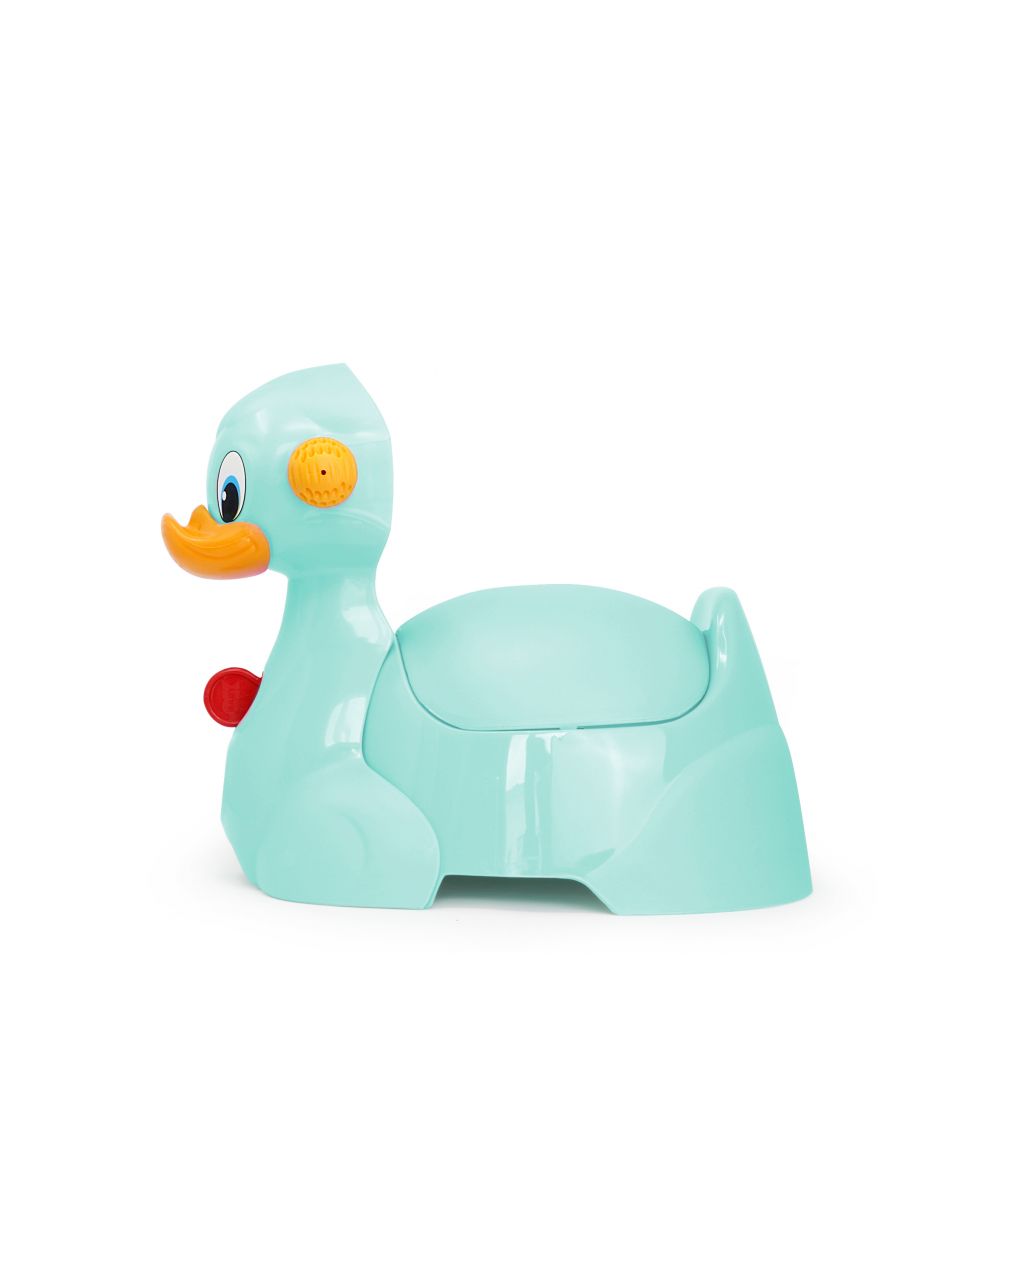 Vasino quack azzurro - ok baby - Okbaby